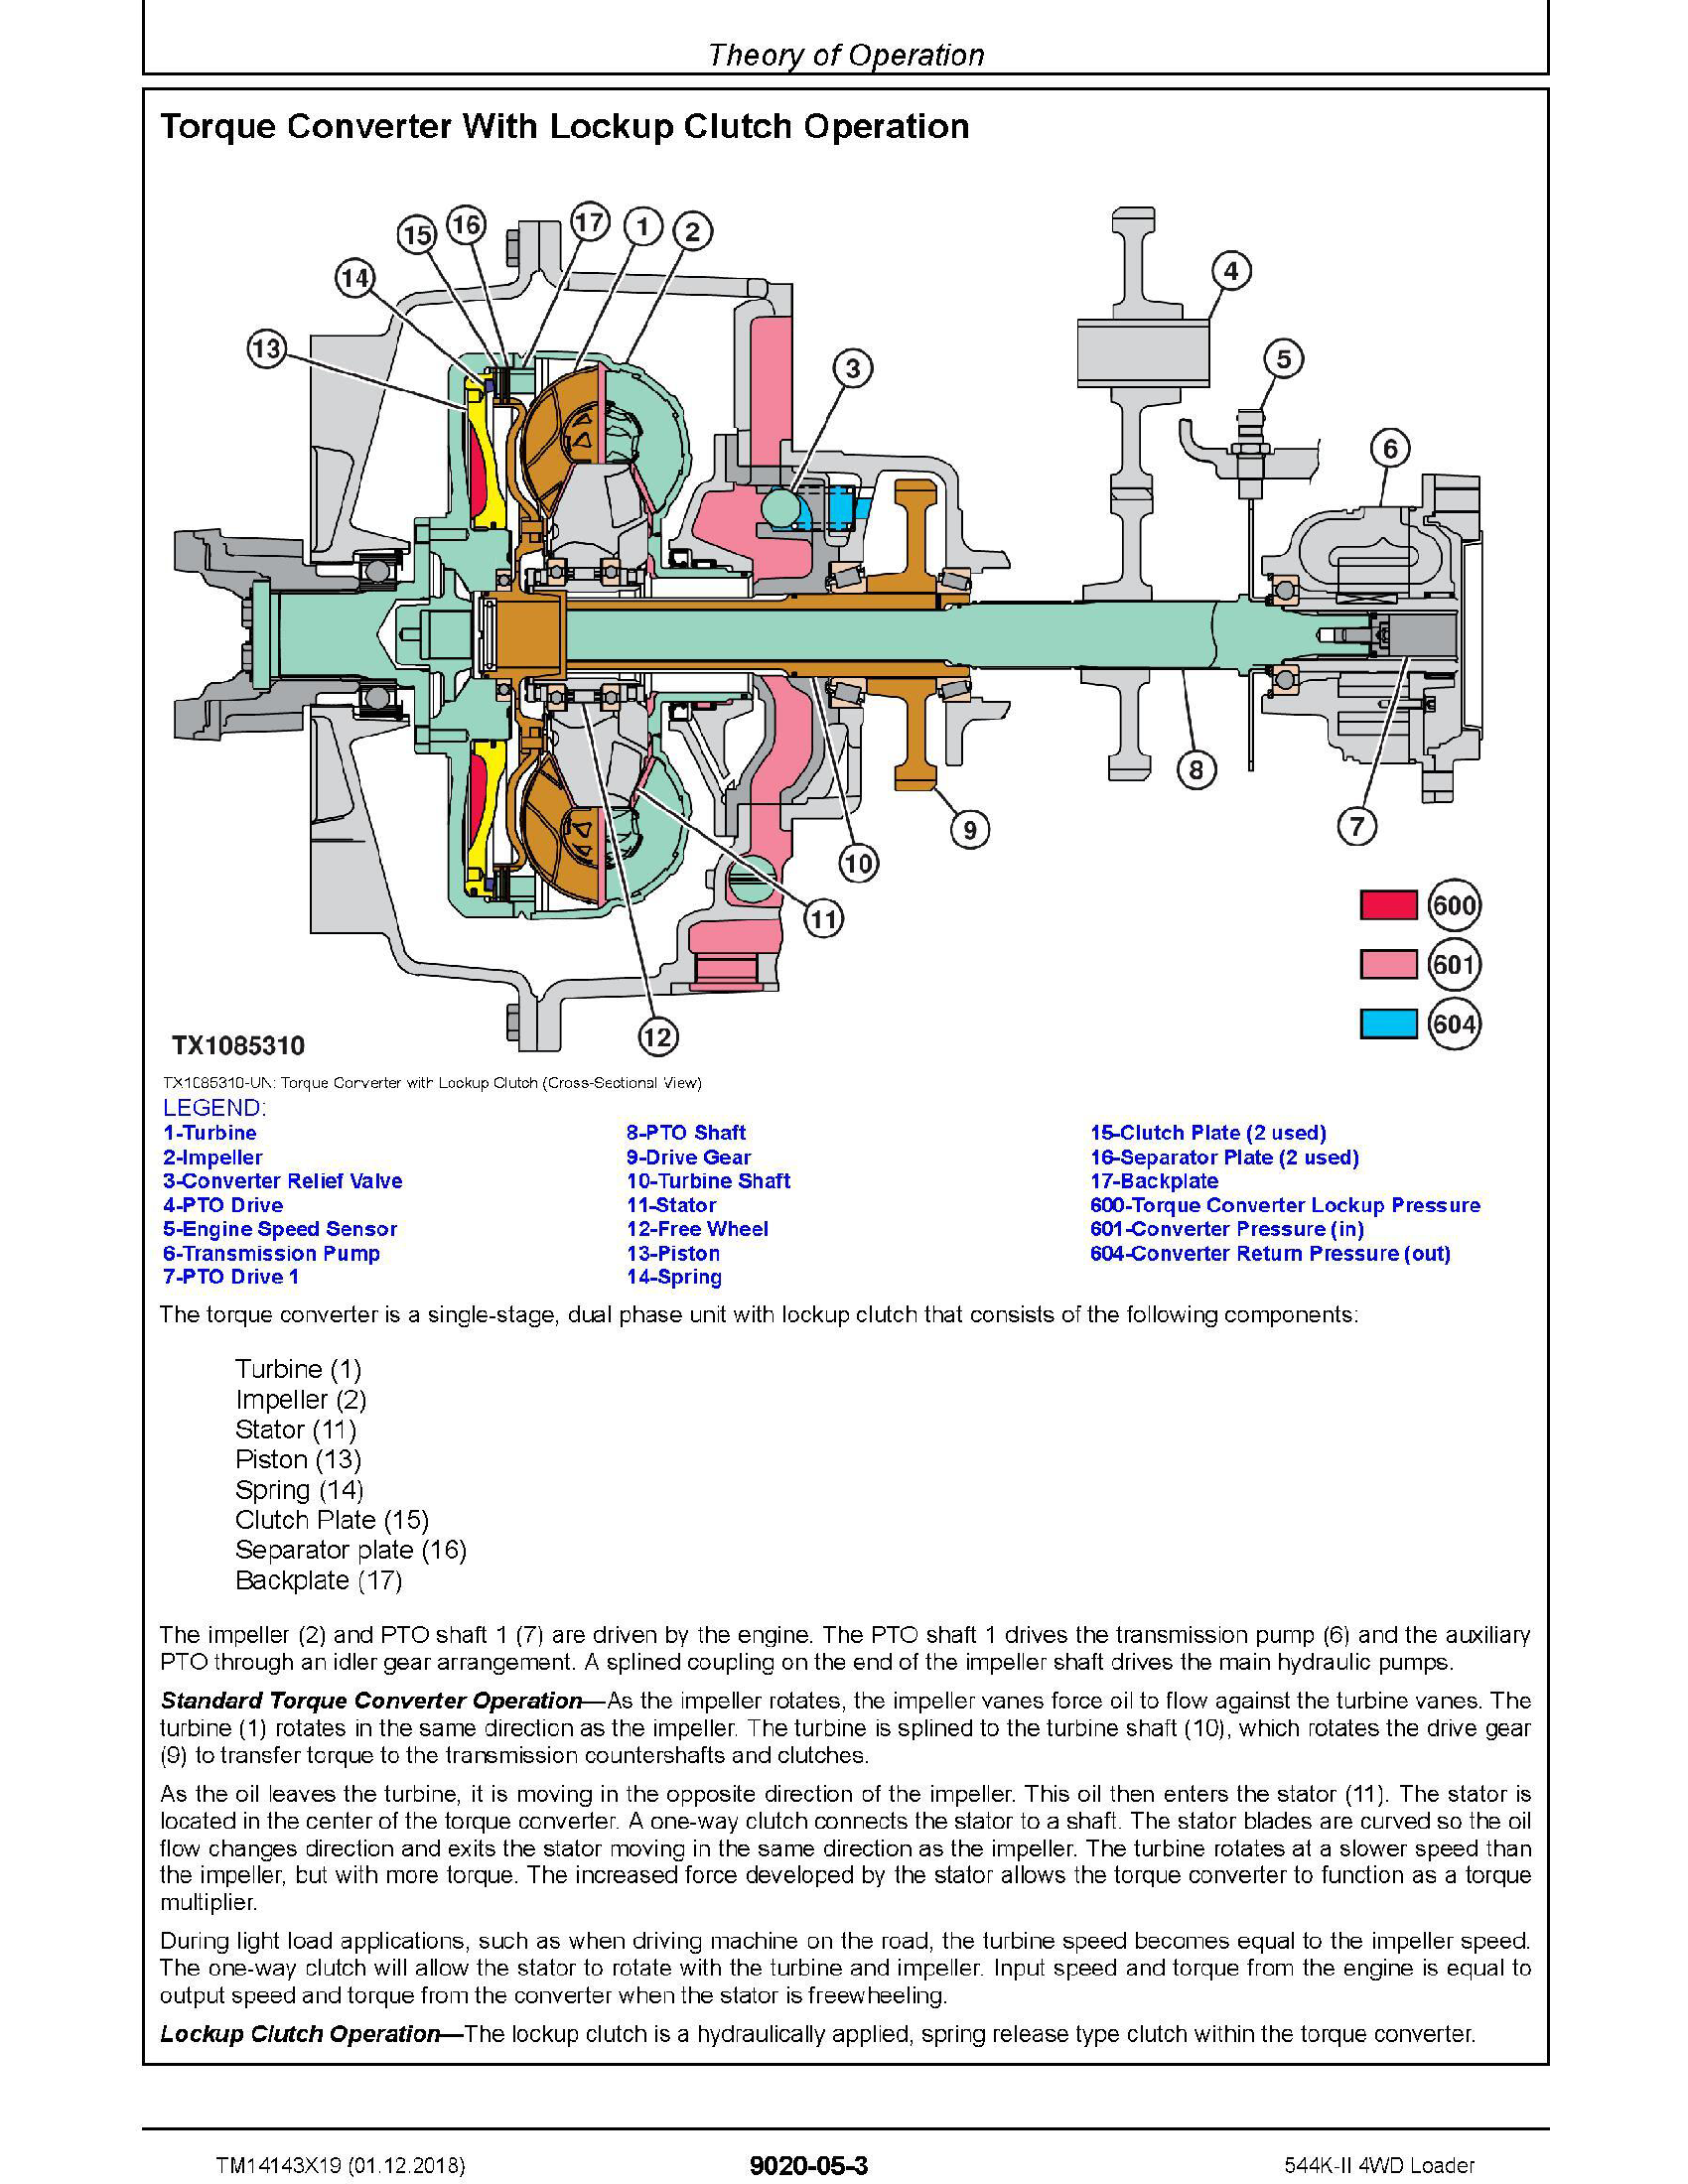 John Deere 1DW544K manual pdf